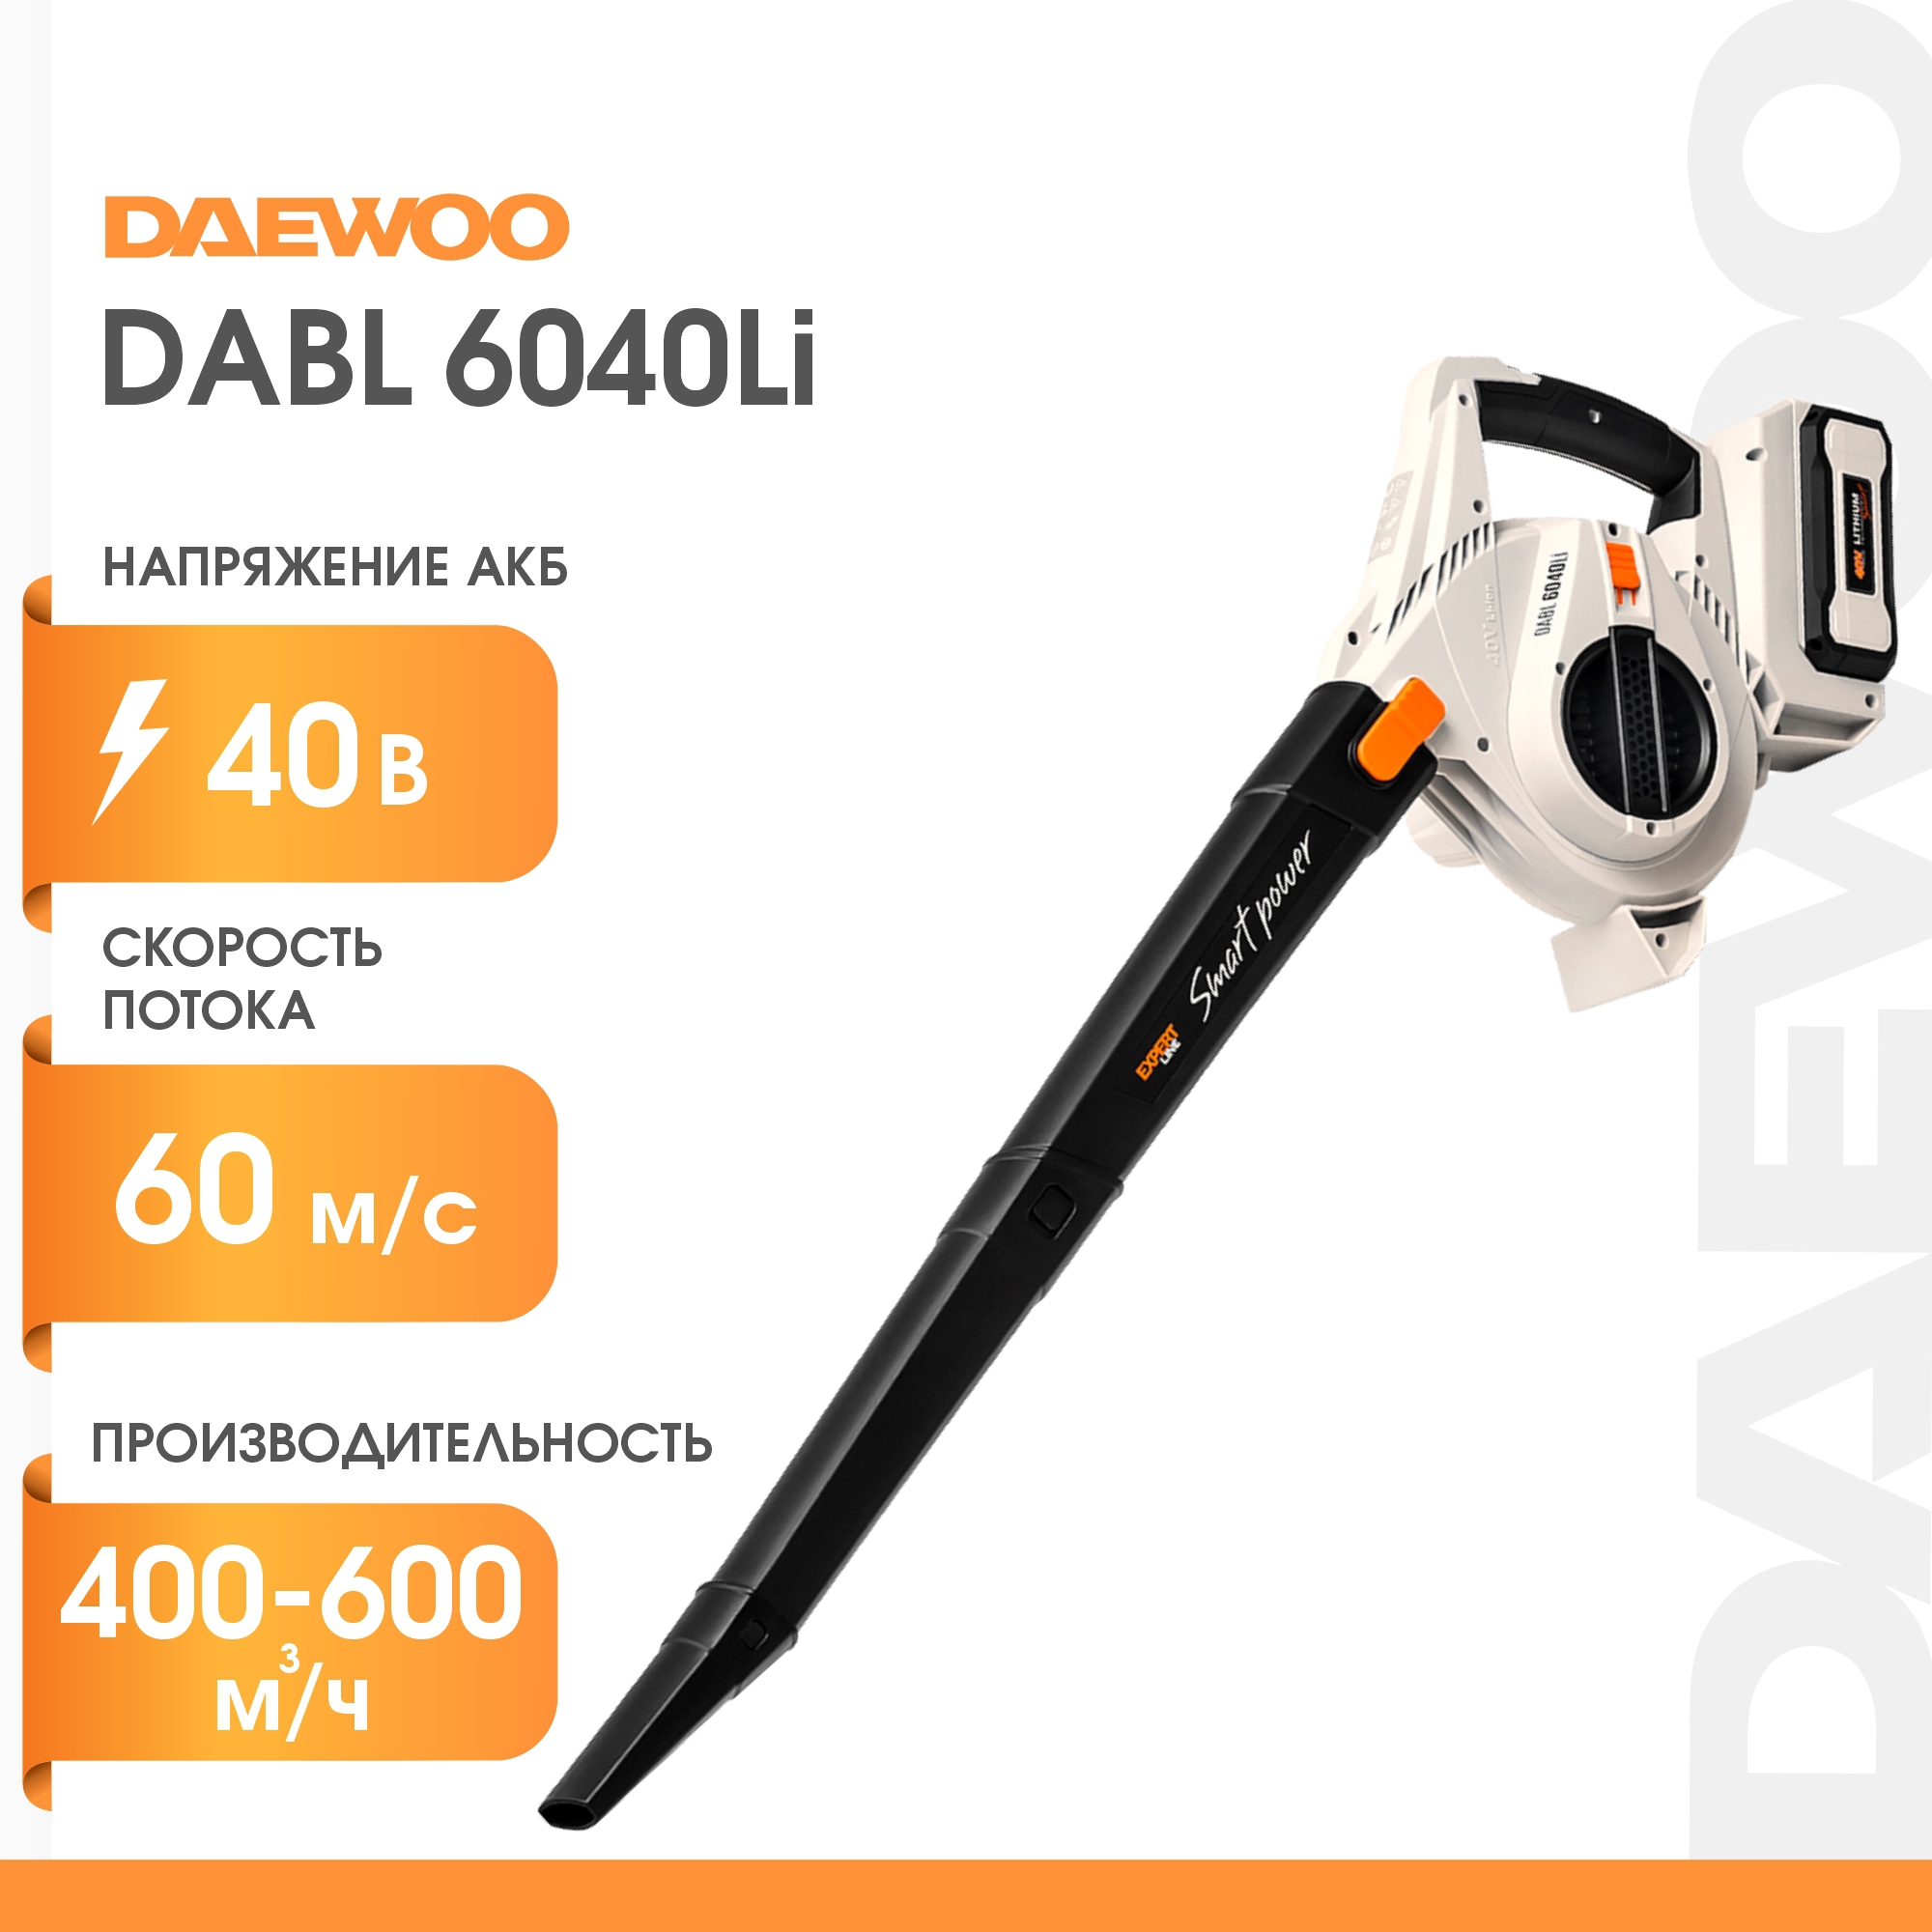 -пылесос Daewoo аккумуляторный DABL 6040Li  .